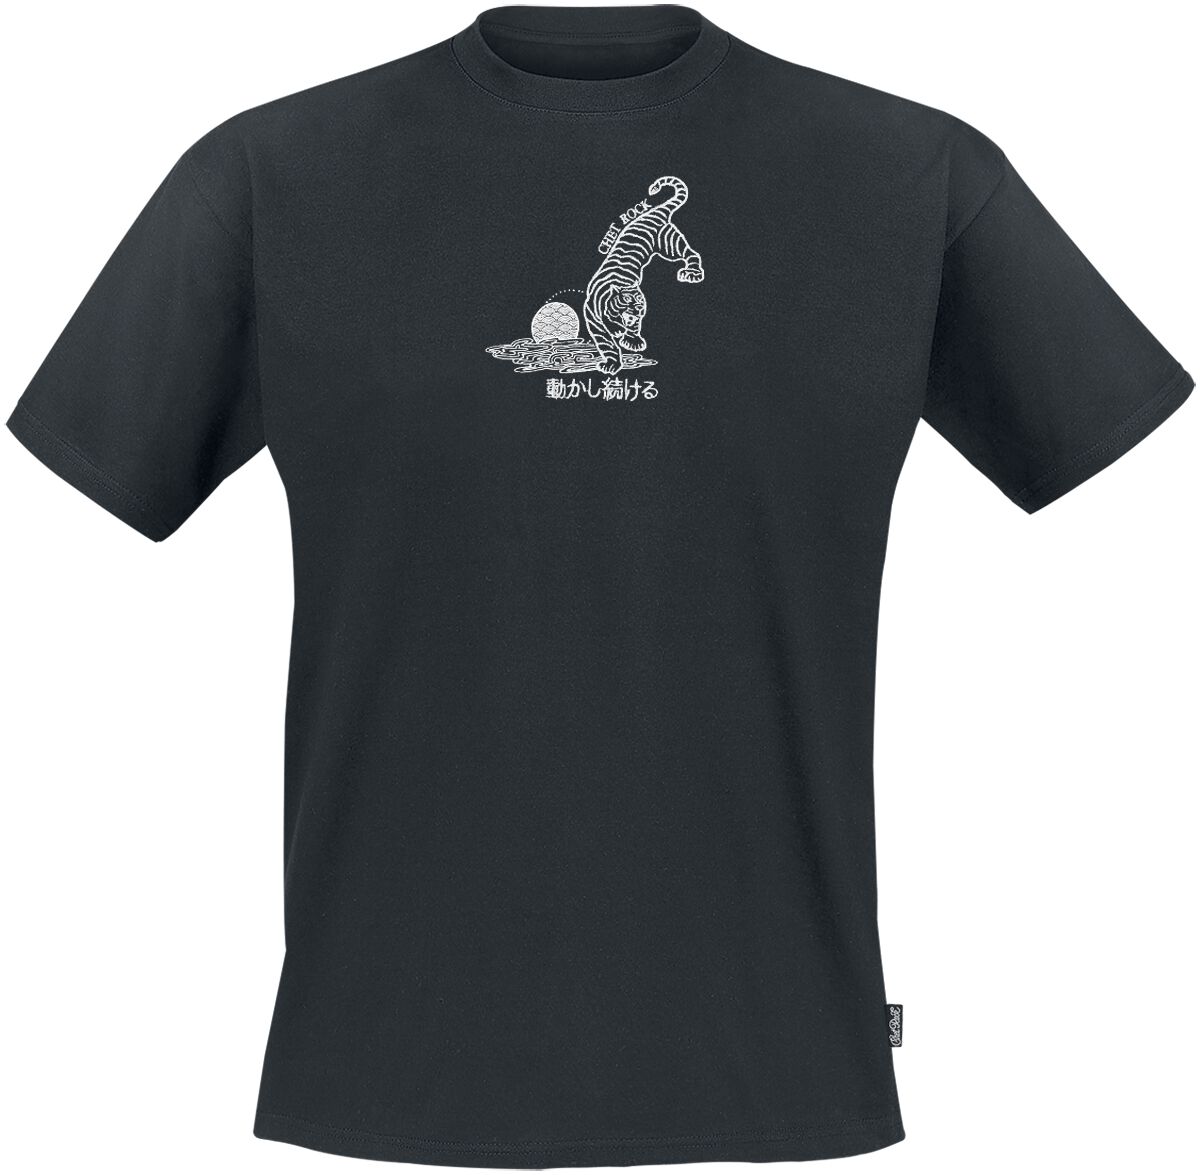 Chet Rock Crouching Tiger T-Shirt schwarz in M